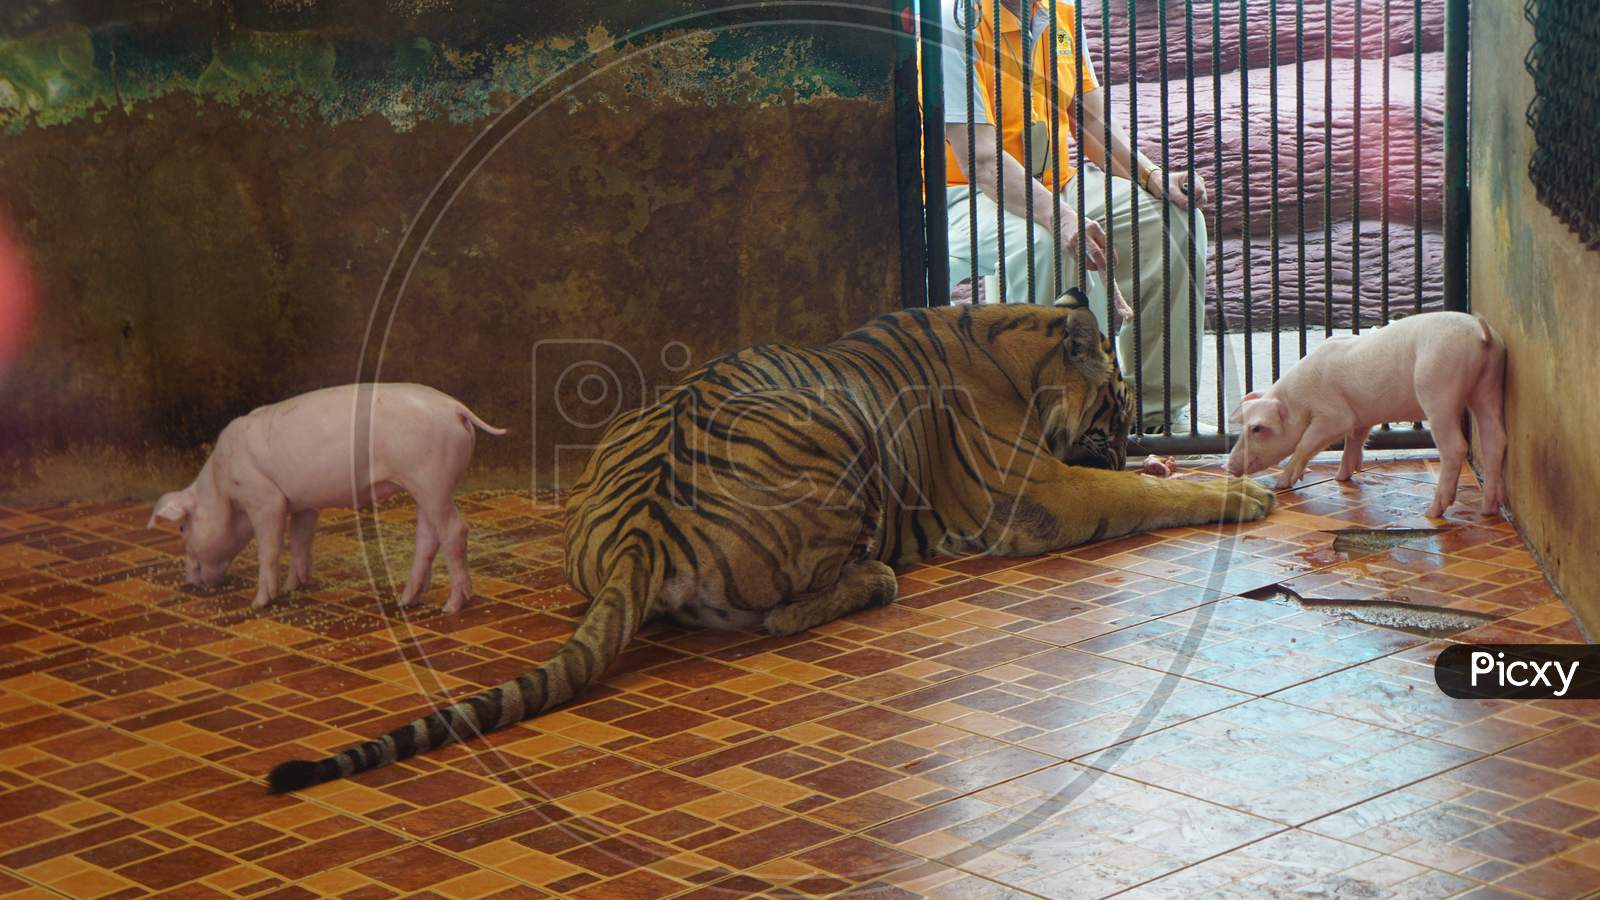 sriracha tiger zoo in thailand